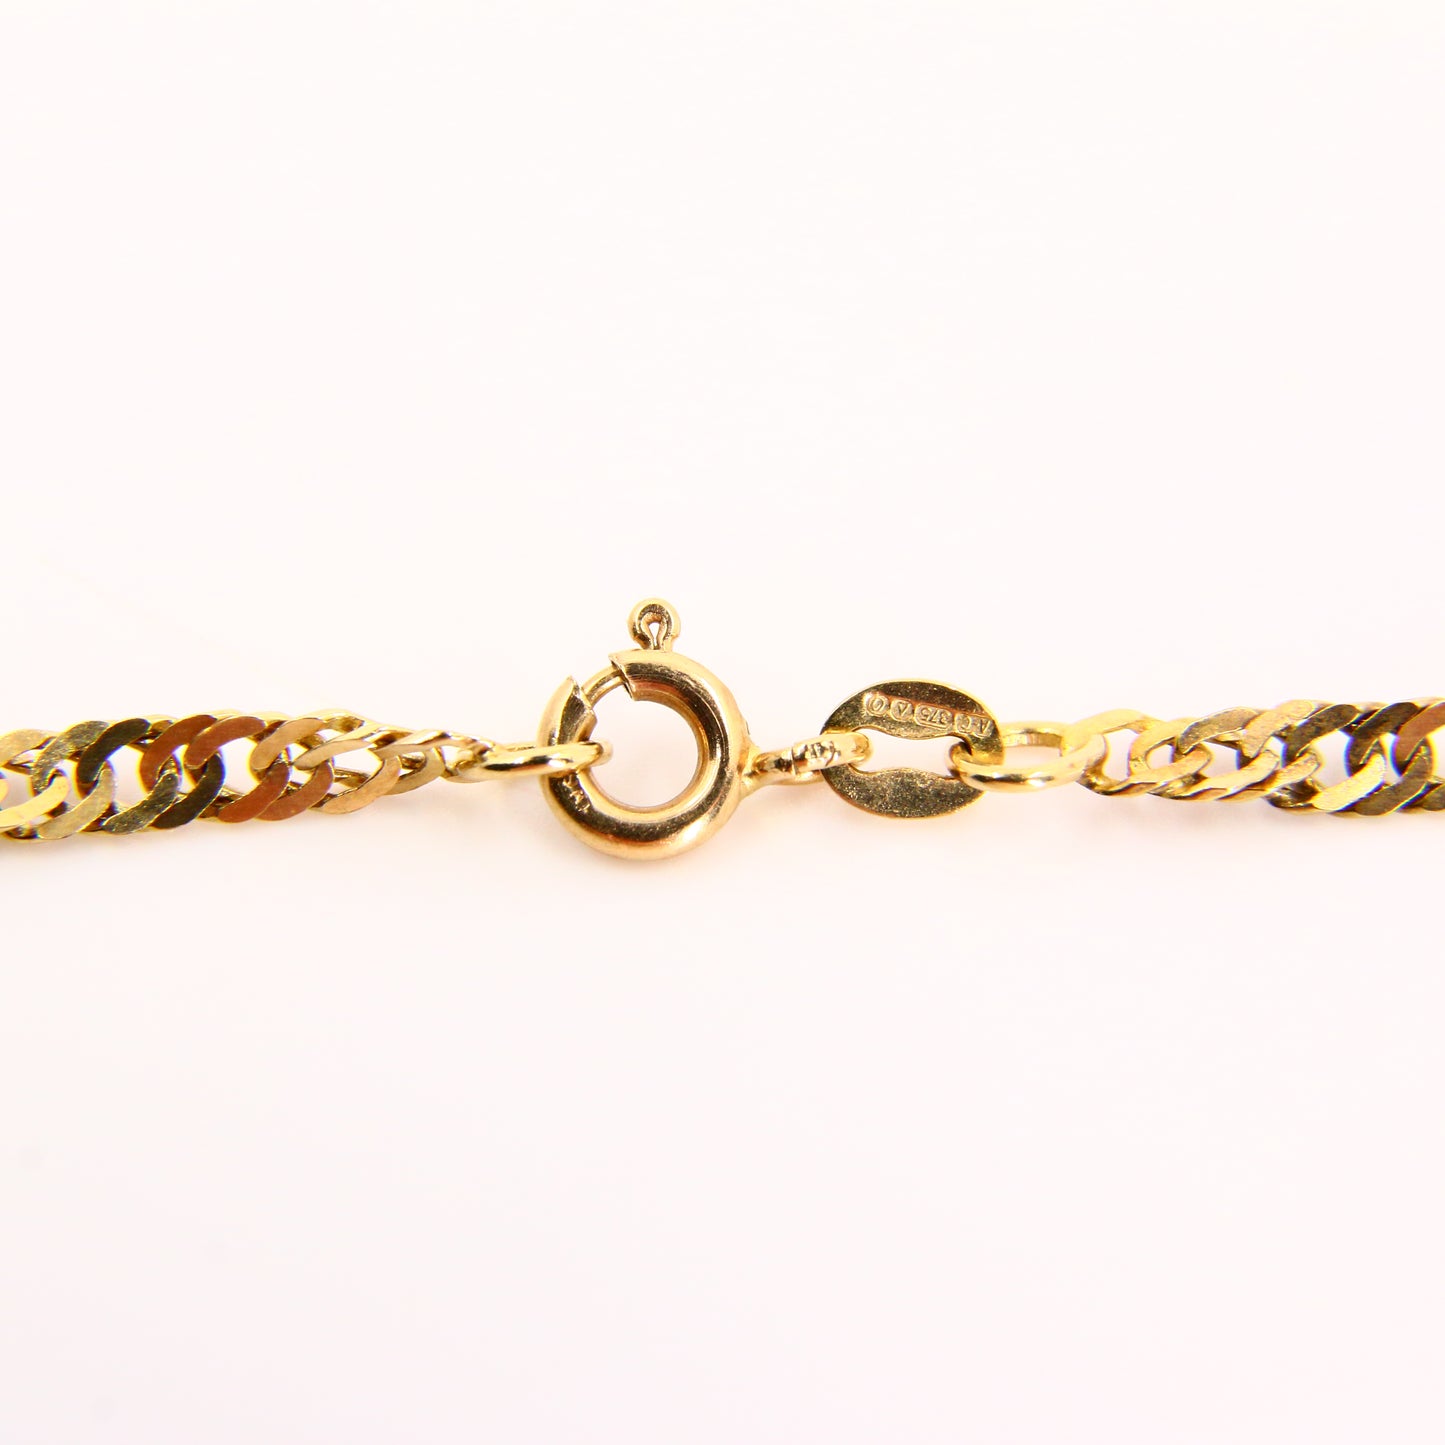 Vintage 9ct Singapore Chain Necklace Twist Link Design 9 Carat Yellow Gold Hallmarked Boxed